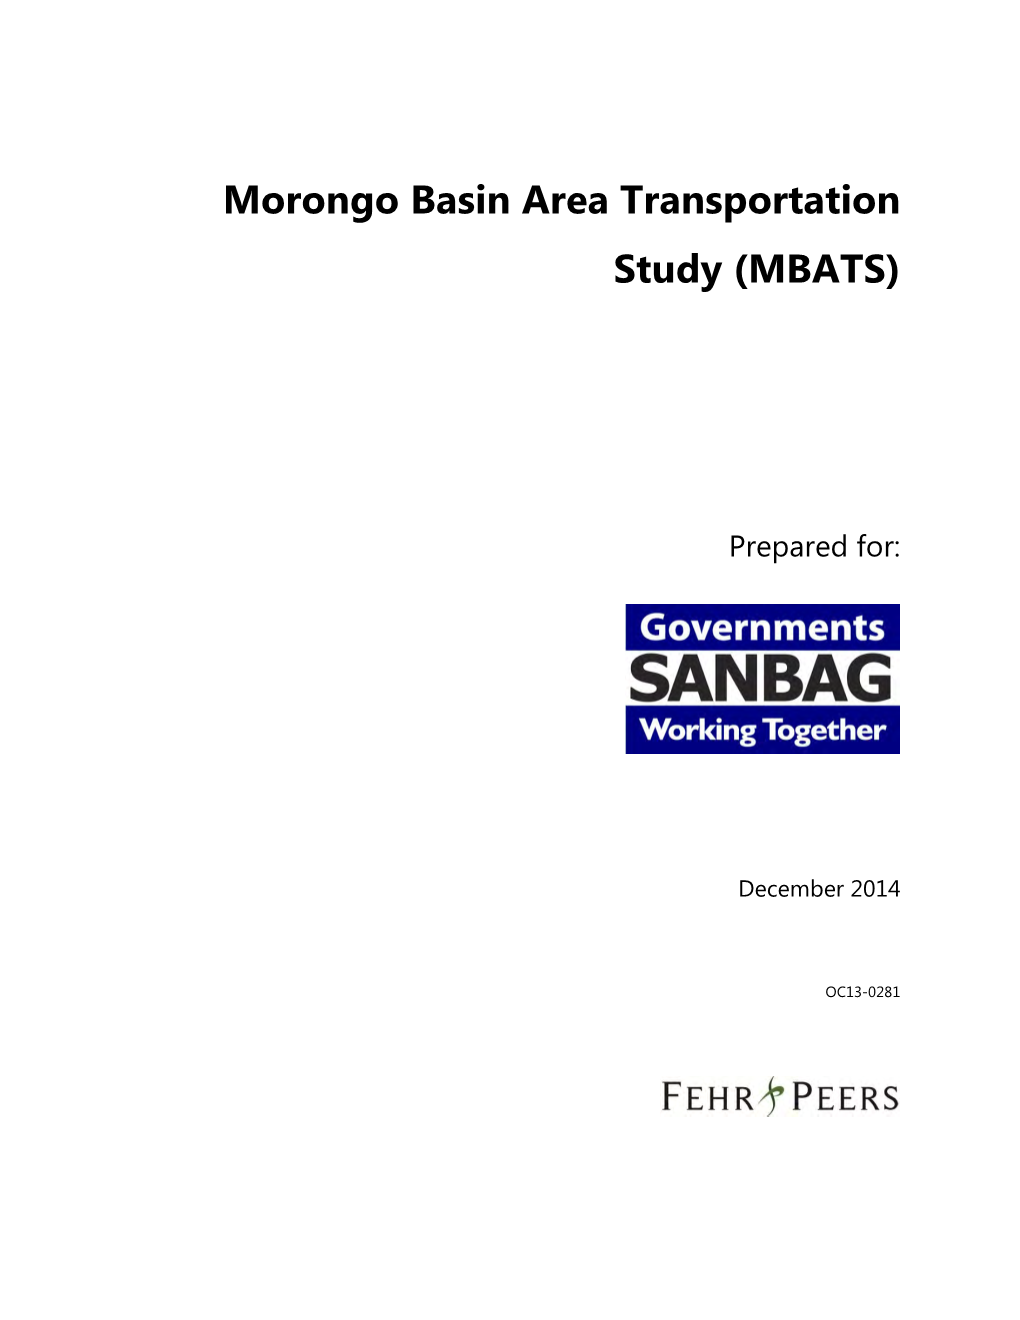 Morongo Basin Area Transportation Study Final Report